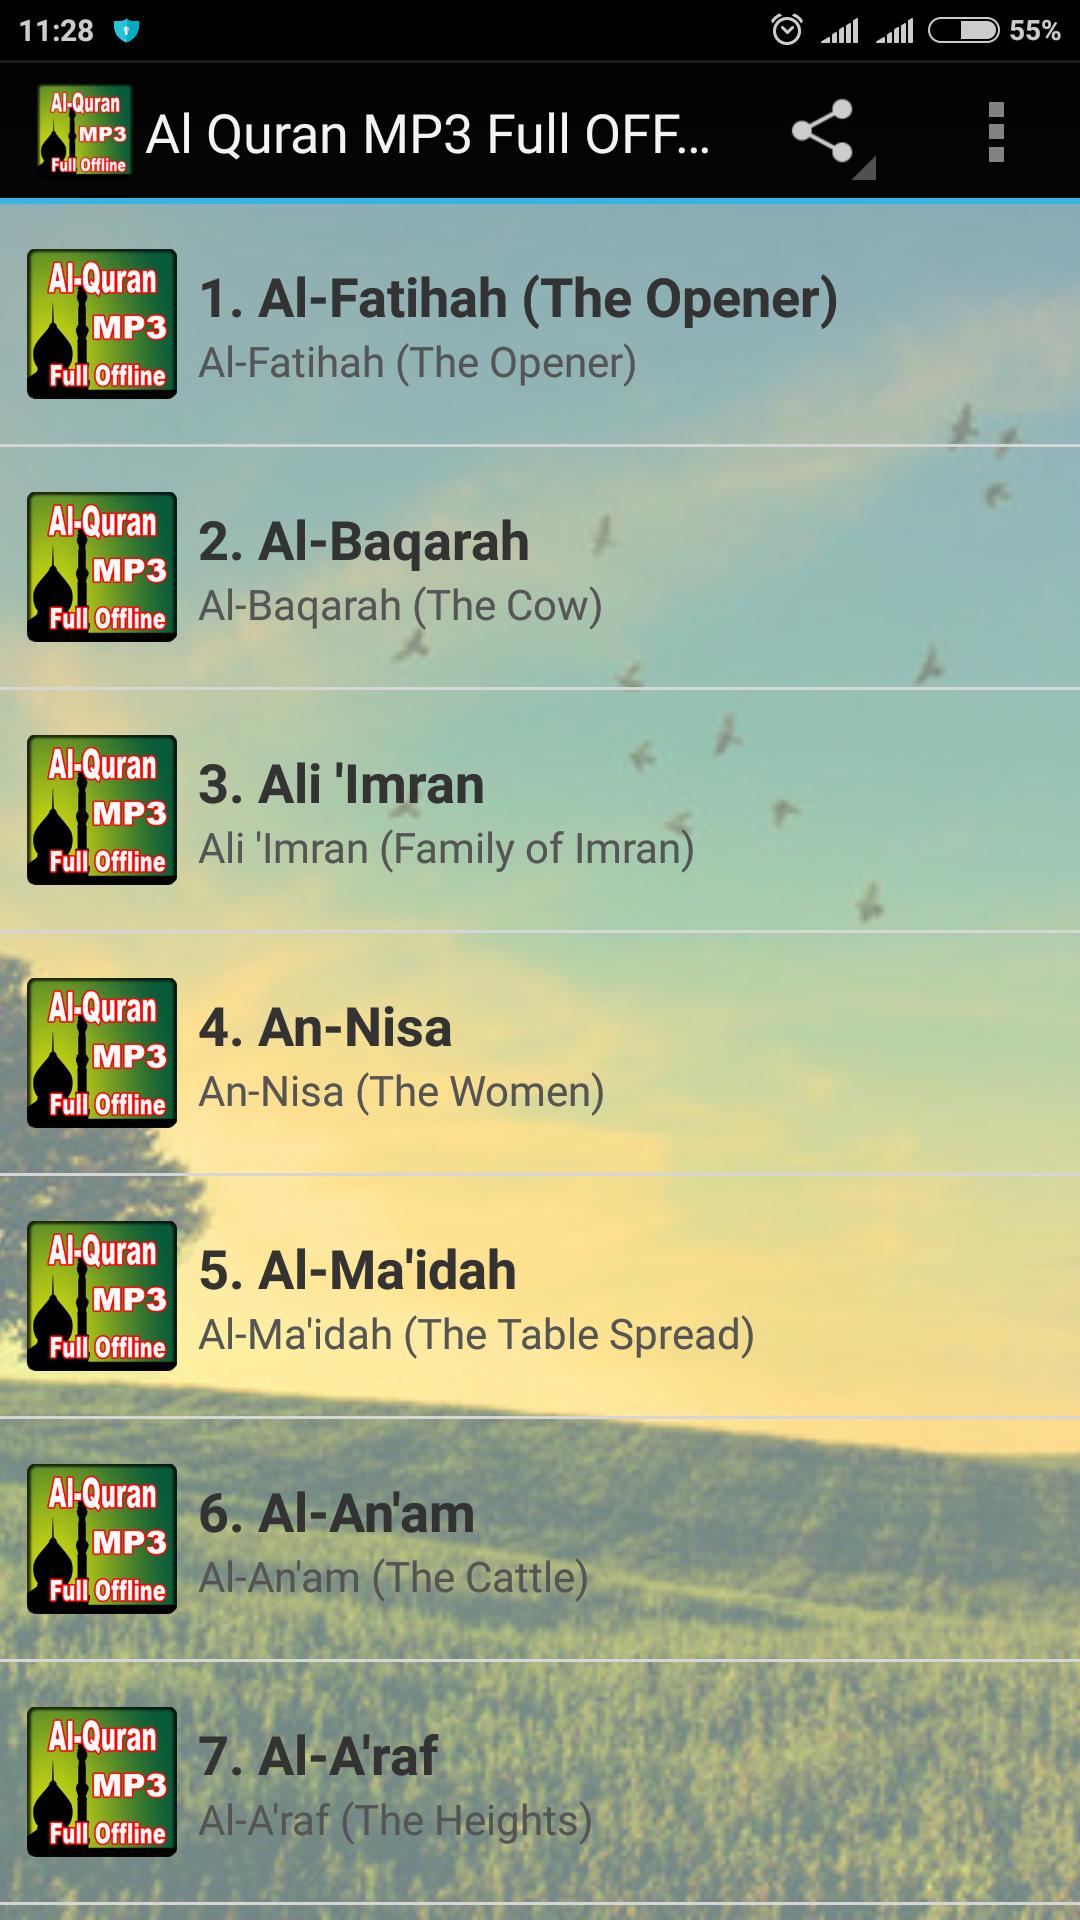 Al Quran MP3 Full Offline for Android - APK Download